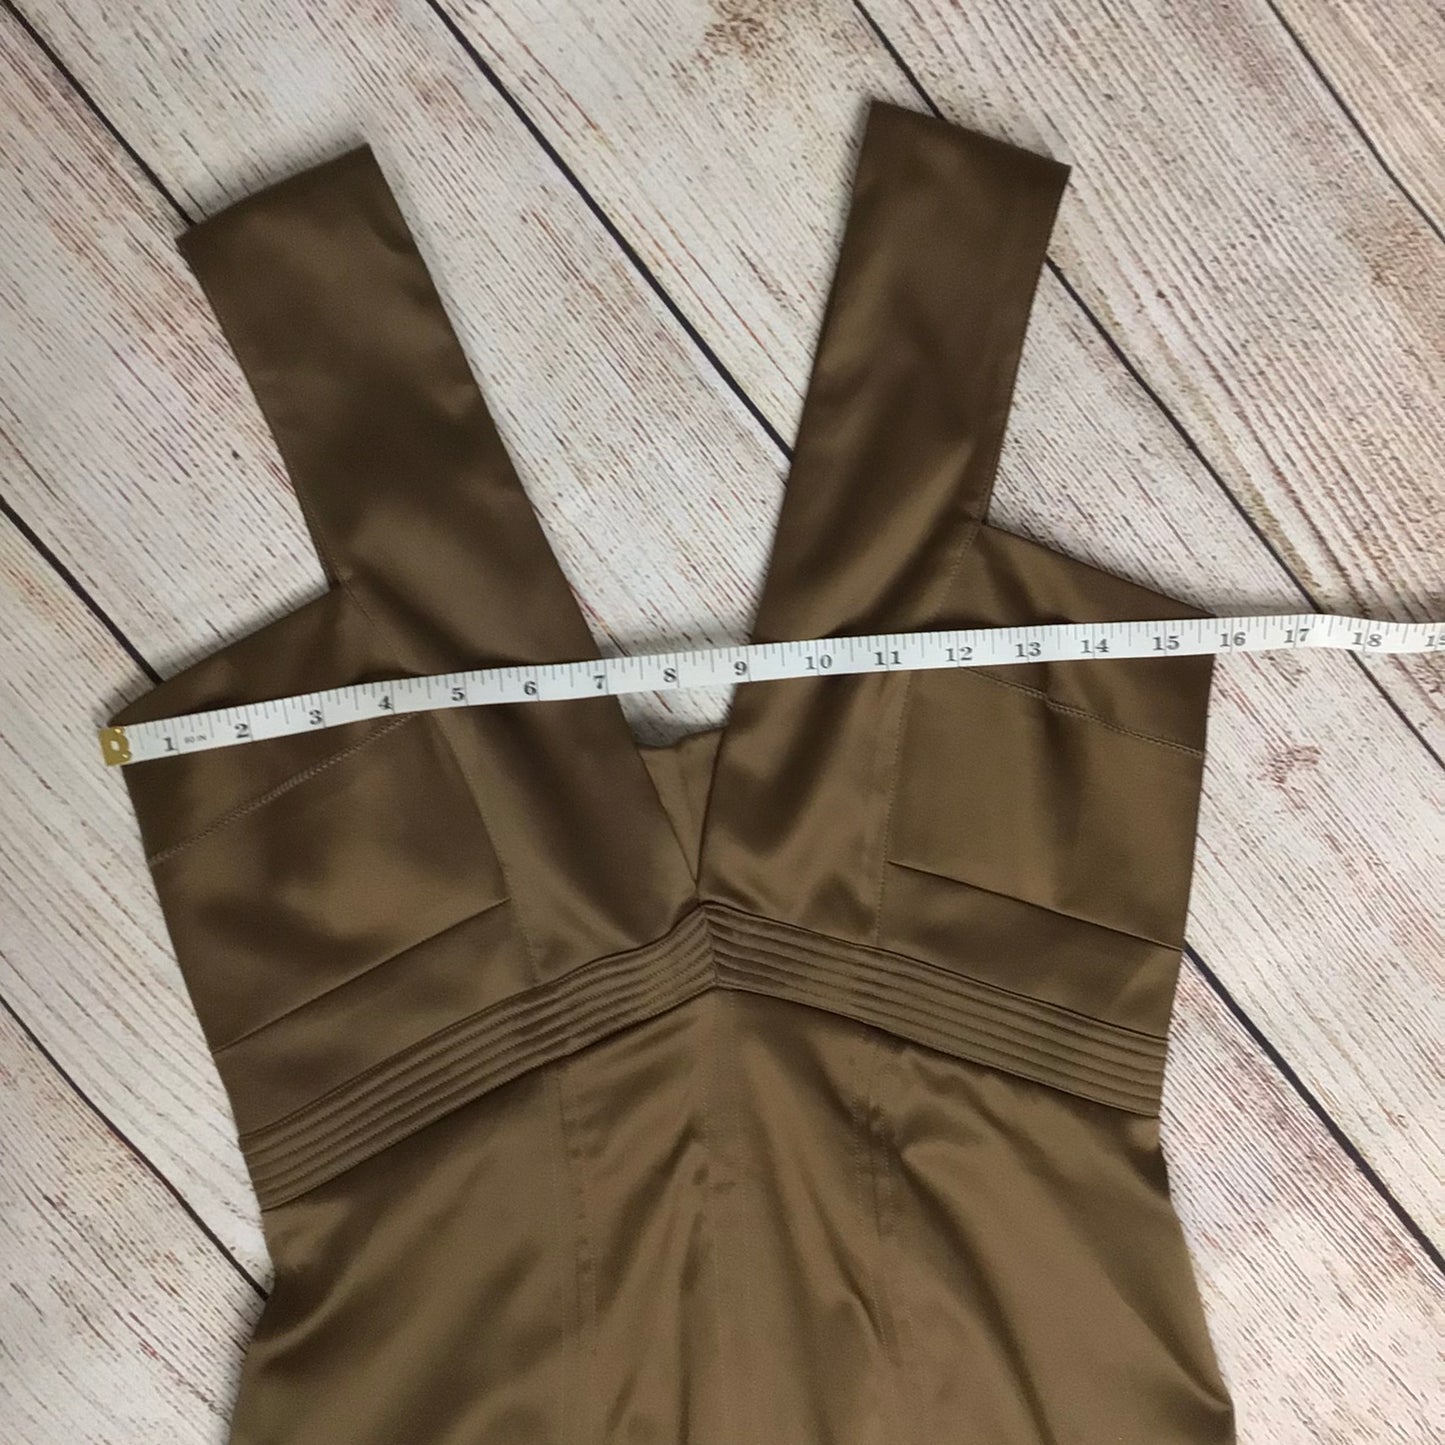 Roberto Cavalli Bronze Midi Dress Size 14 (EU 42)